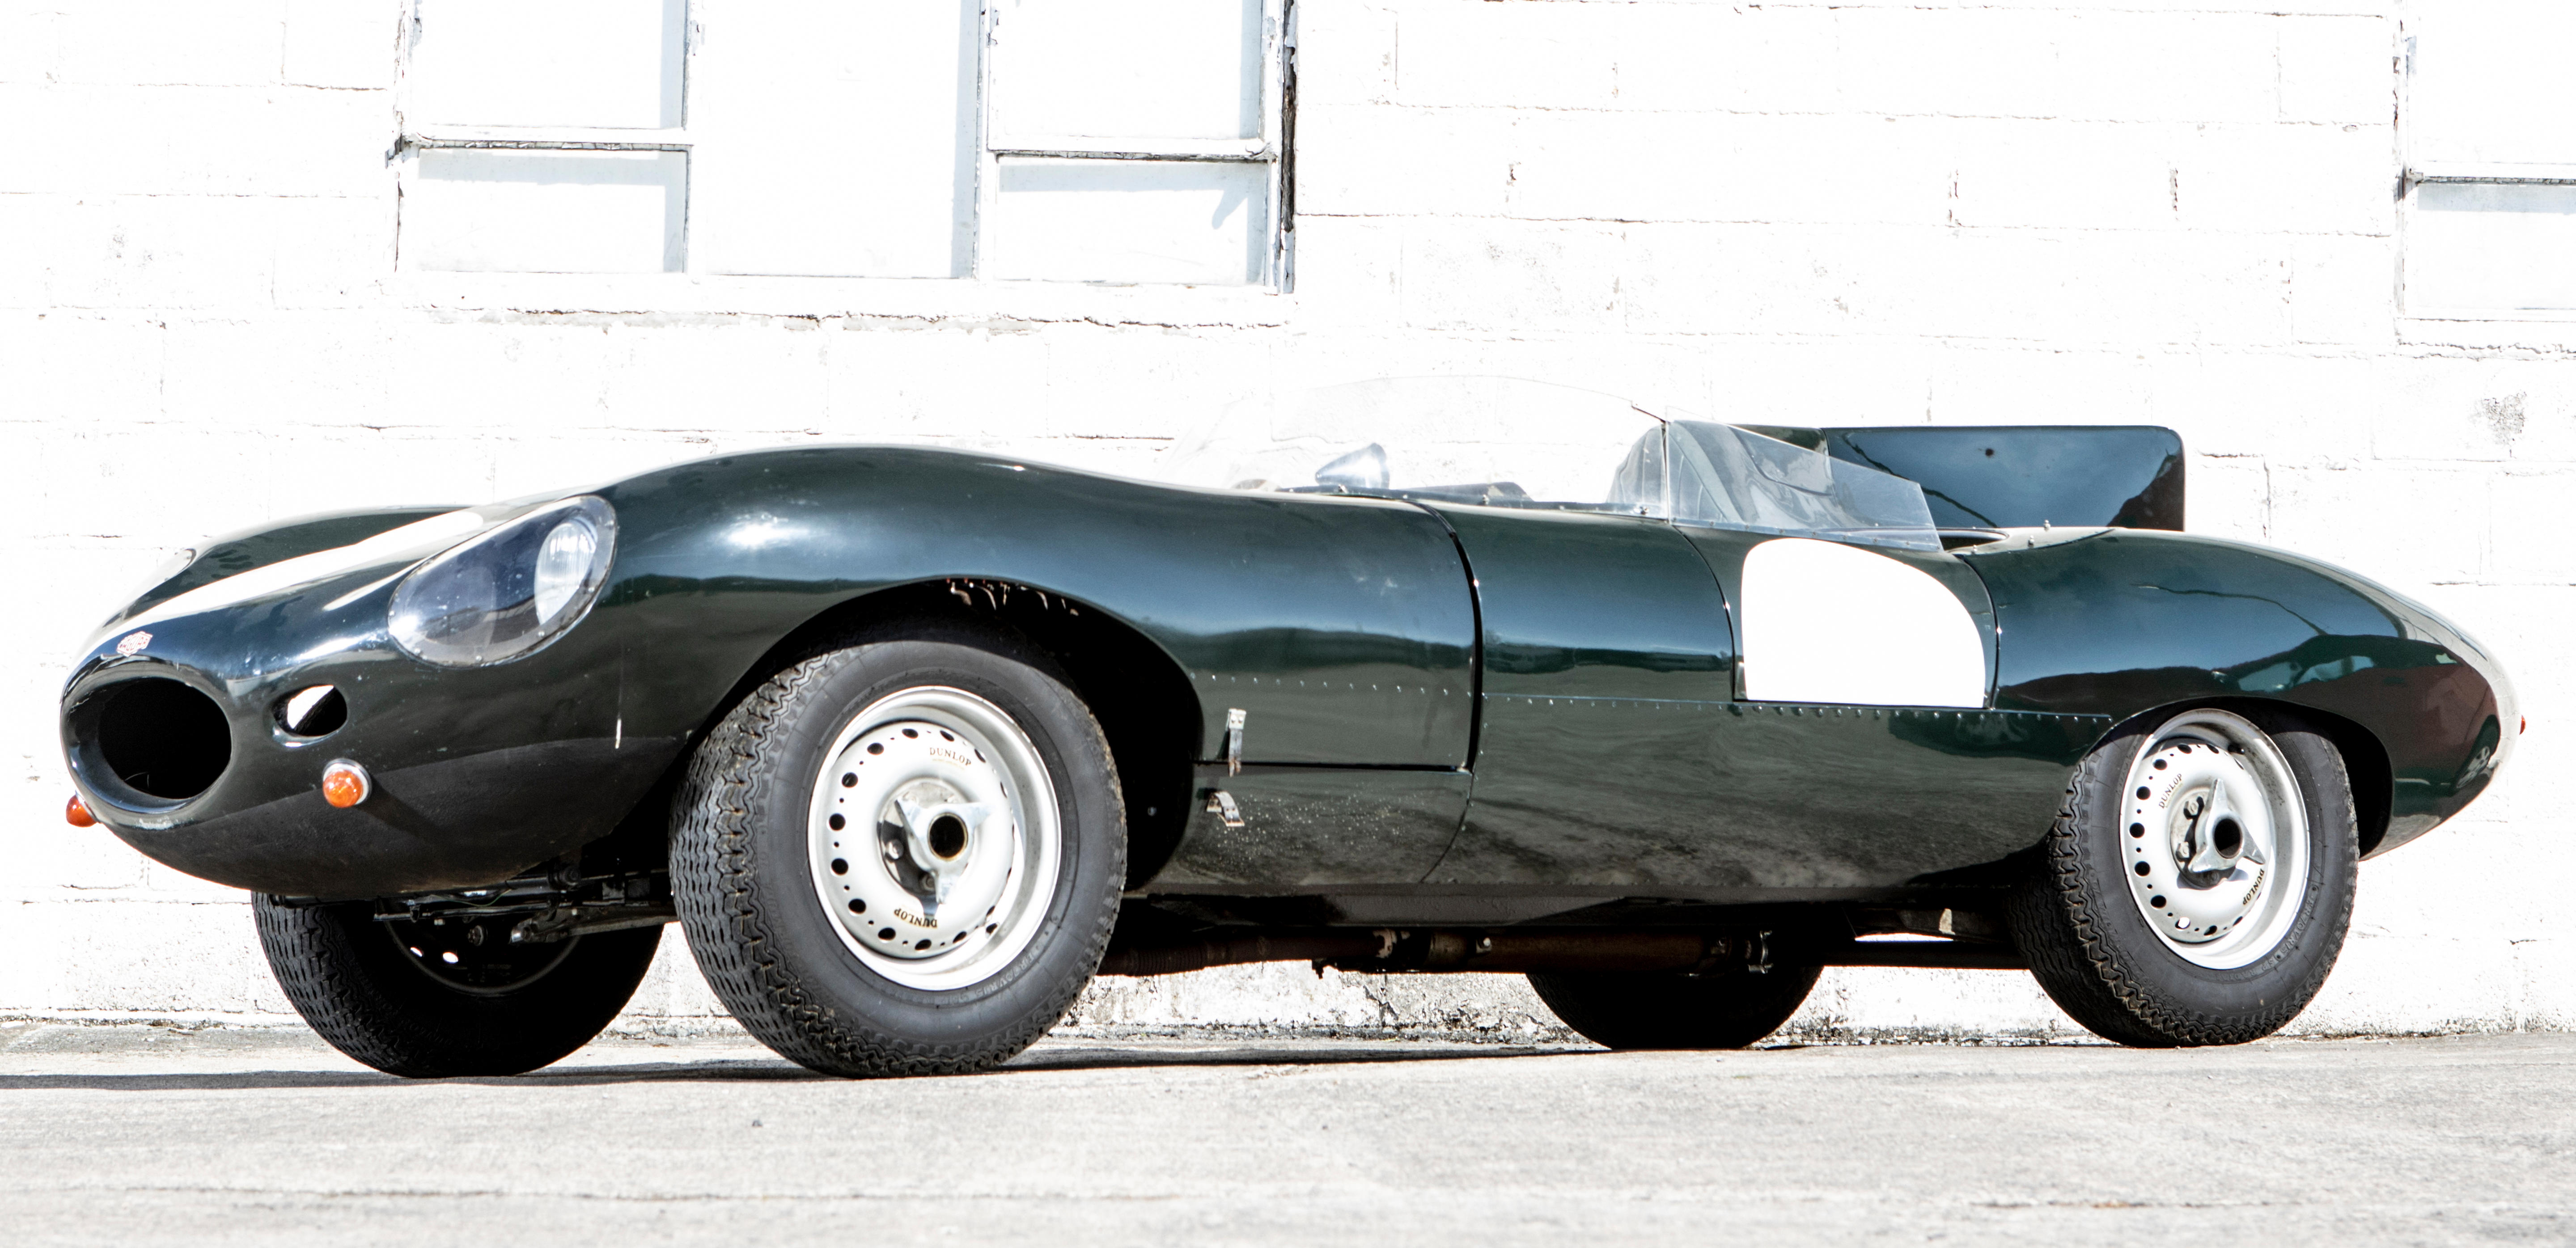 Goodwood - Goodwood Greats: The most original long nose Jaguar D